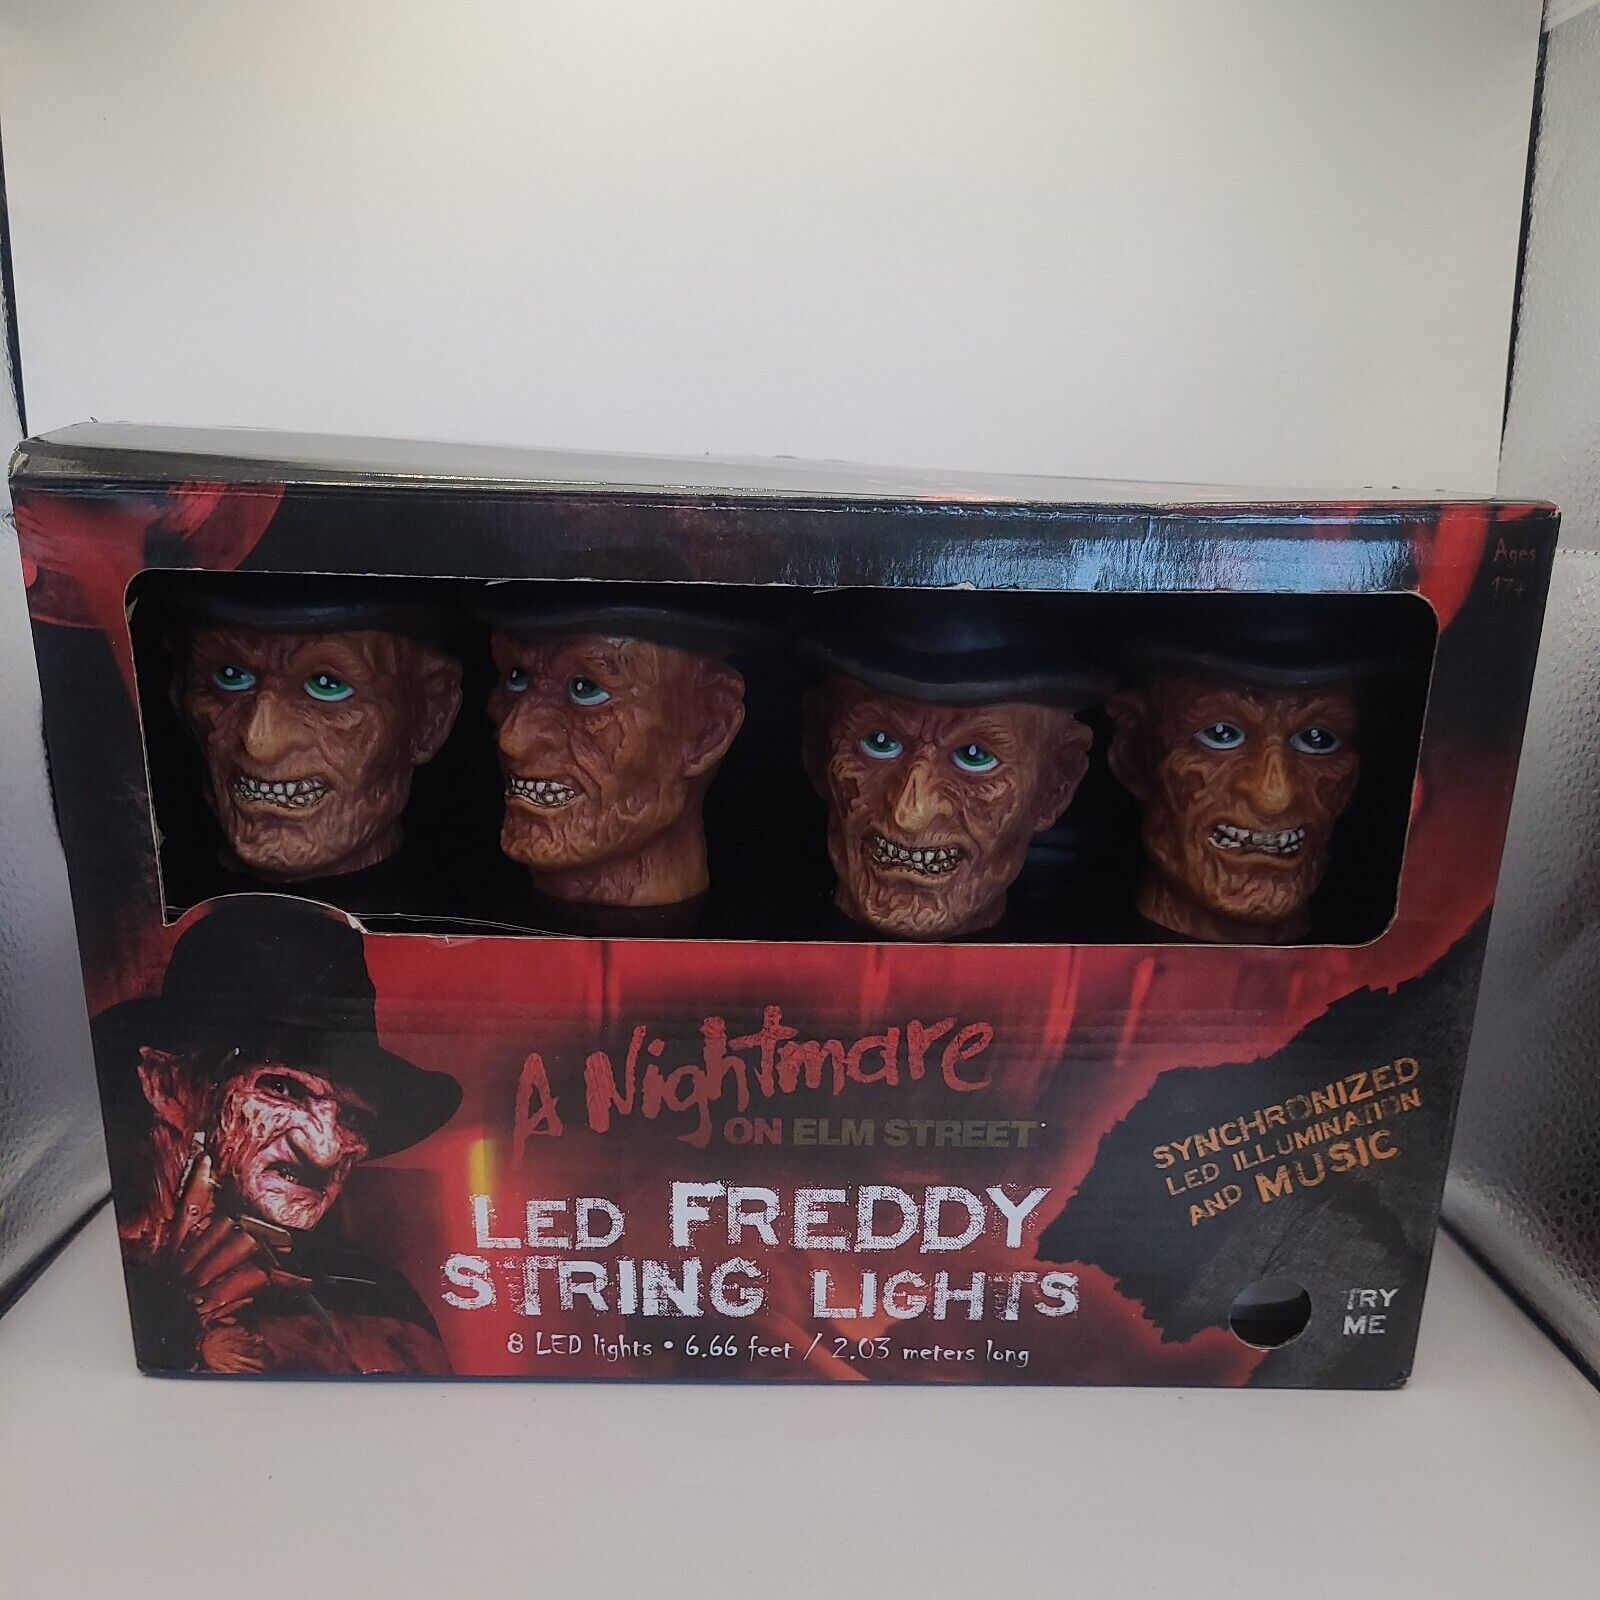 A Nightmare On Elm Street Led Freddy String Lights 8 LED 6.66 feet (E1)